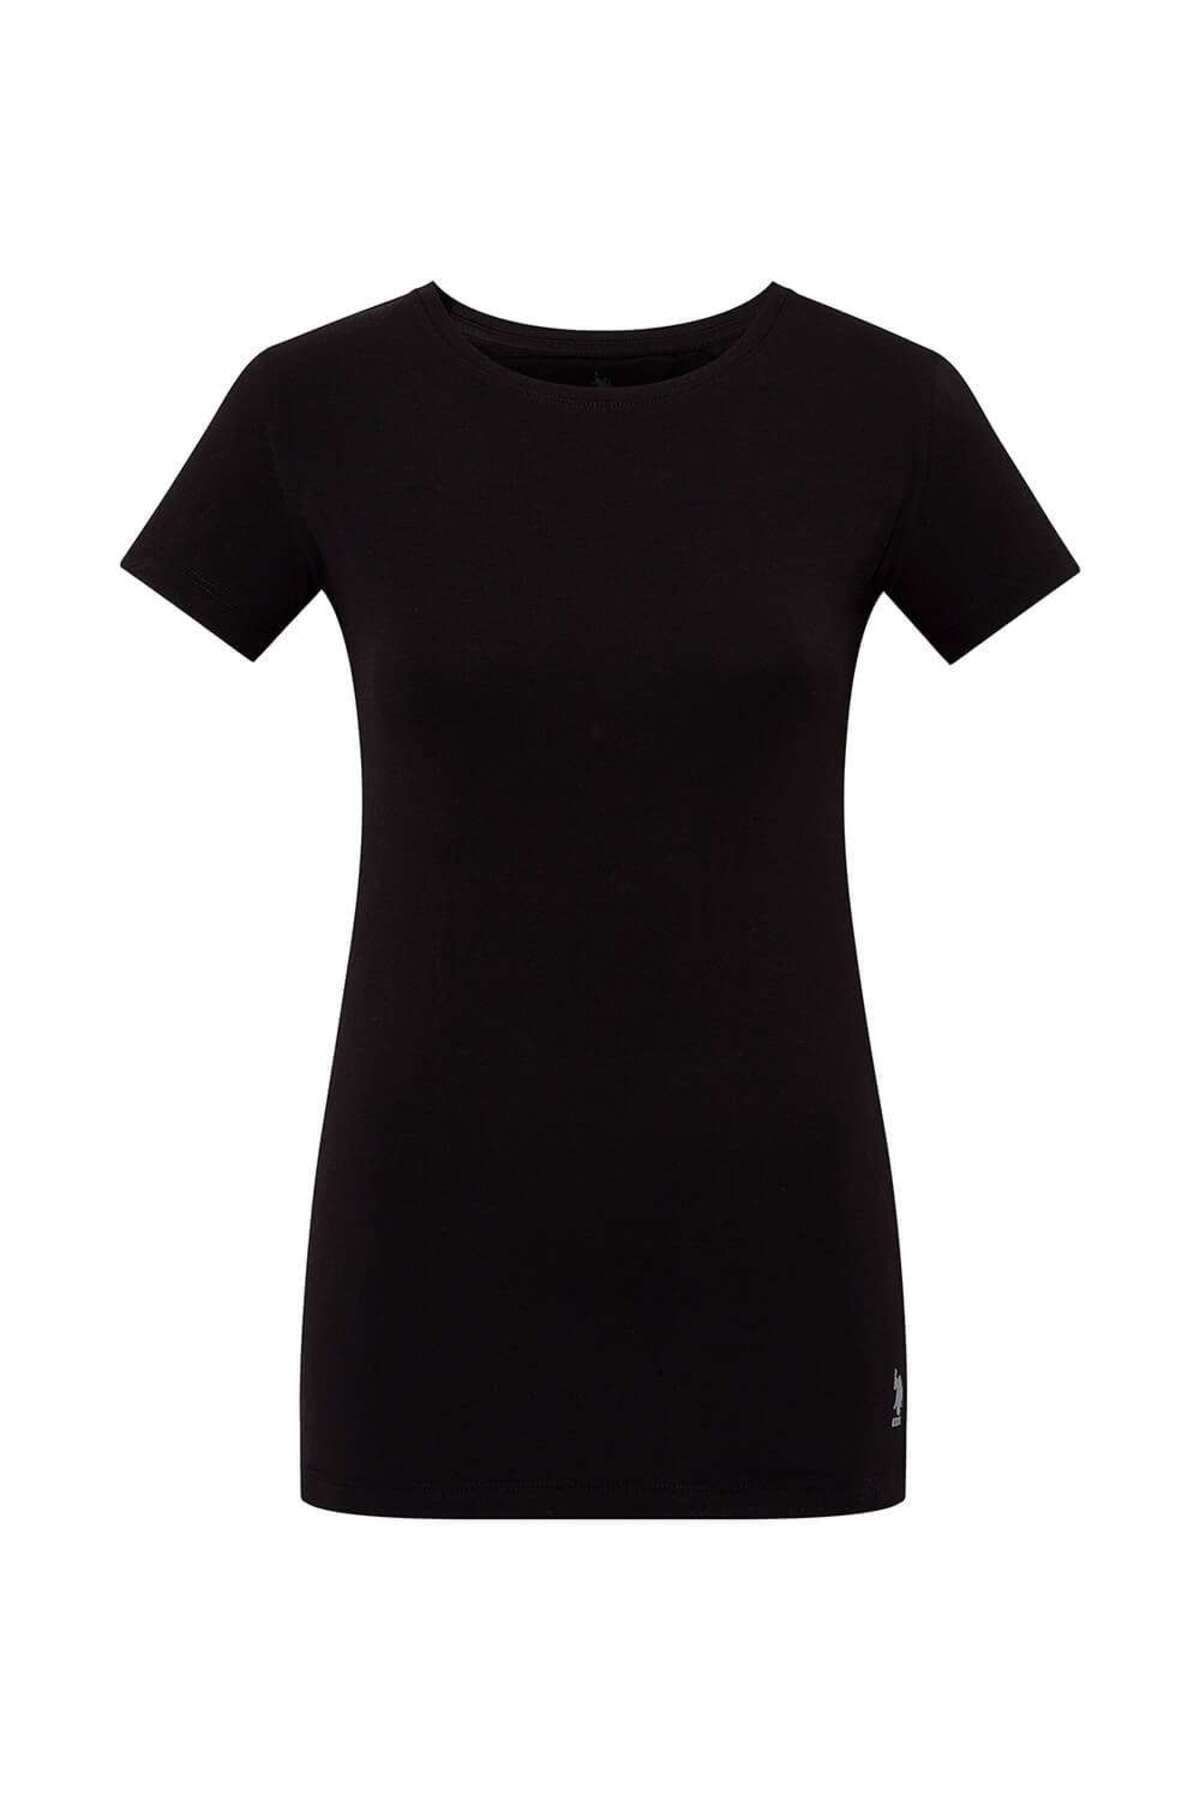 U.S. Polo Assn. Kadın Likralı Pamuklu Modal Siyah Kısa Kollu T-shirt